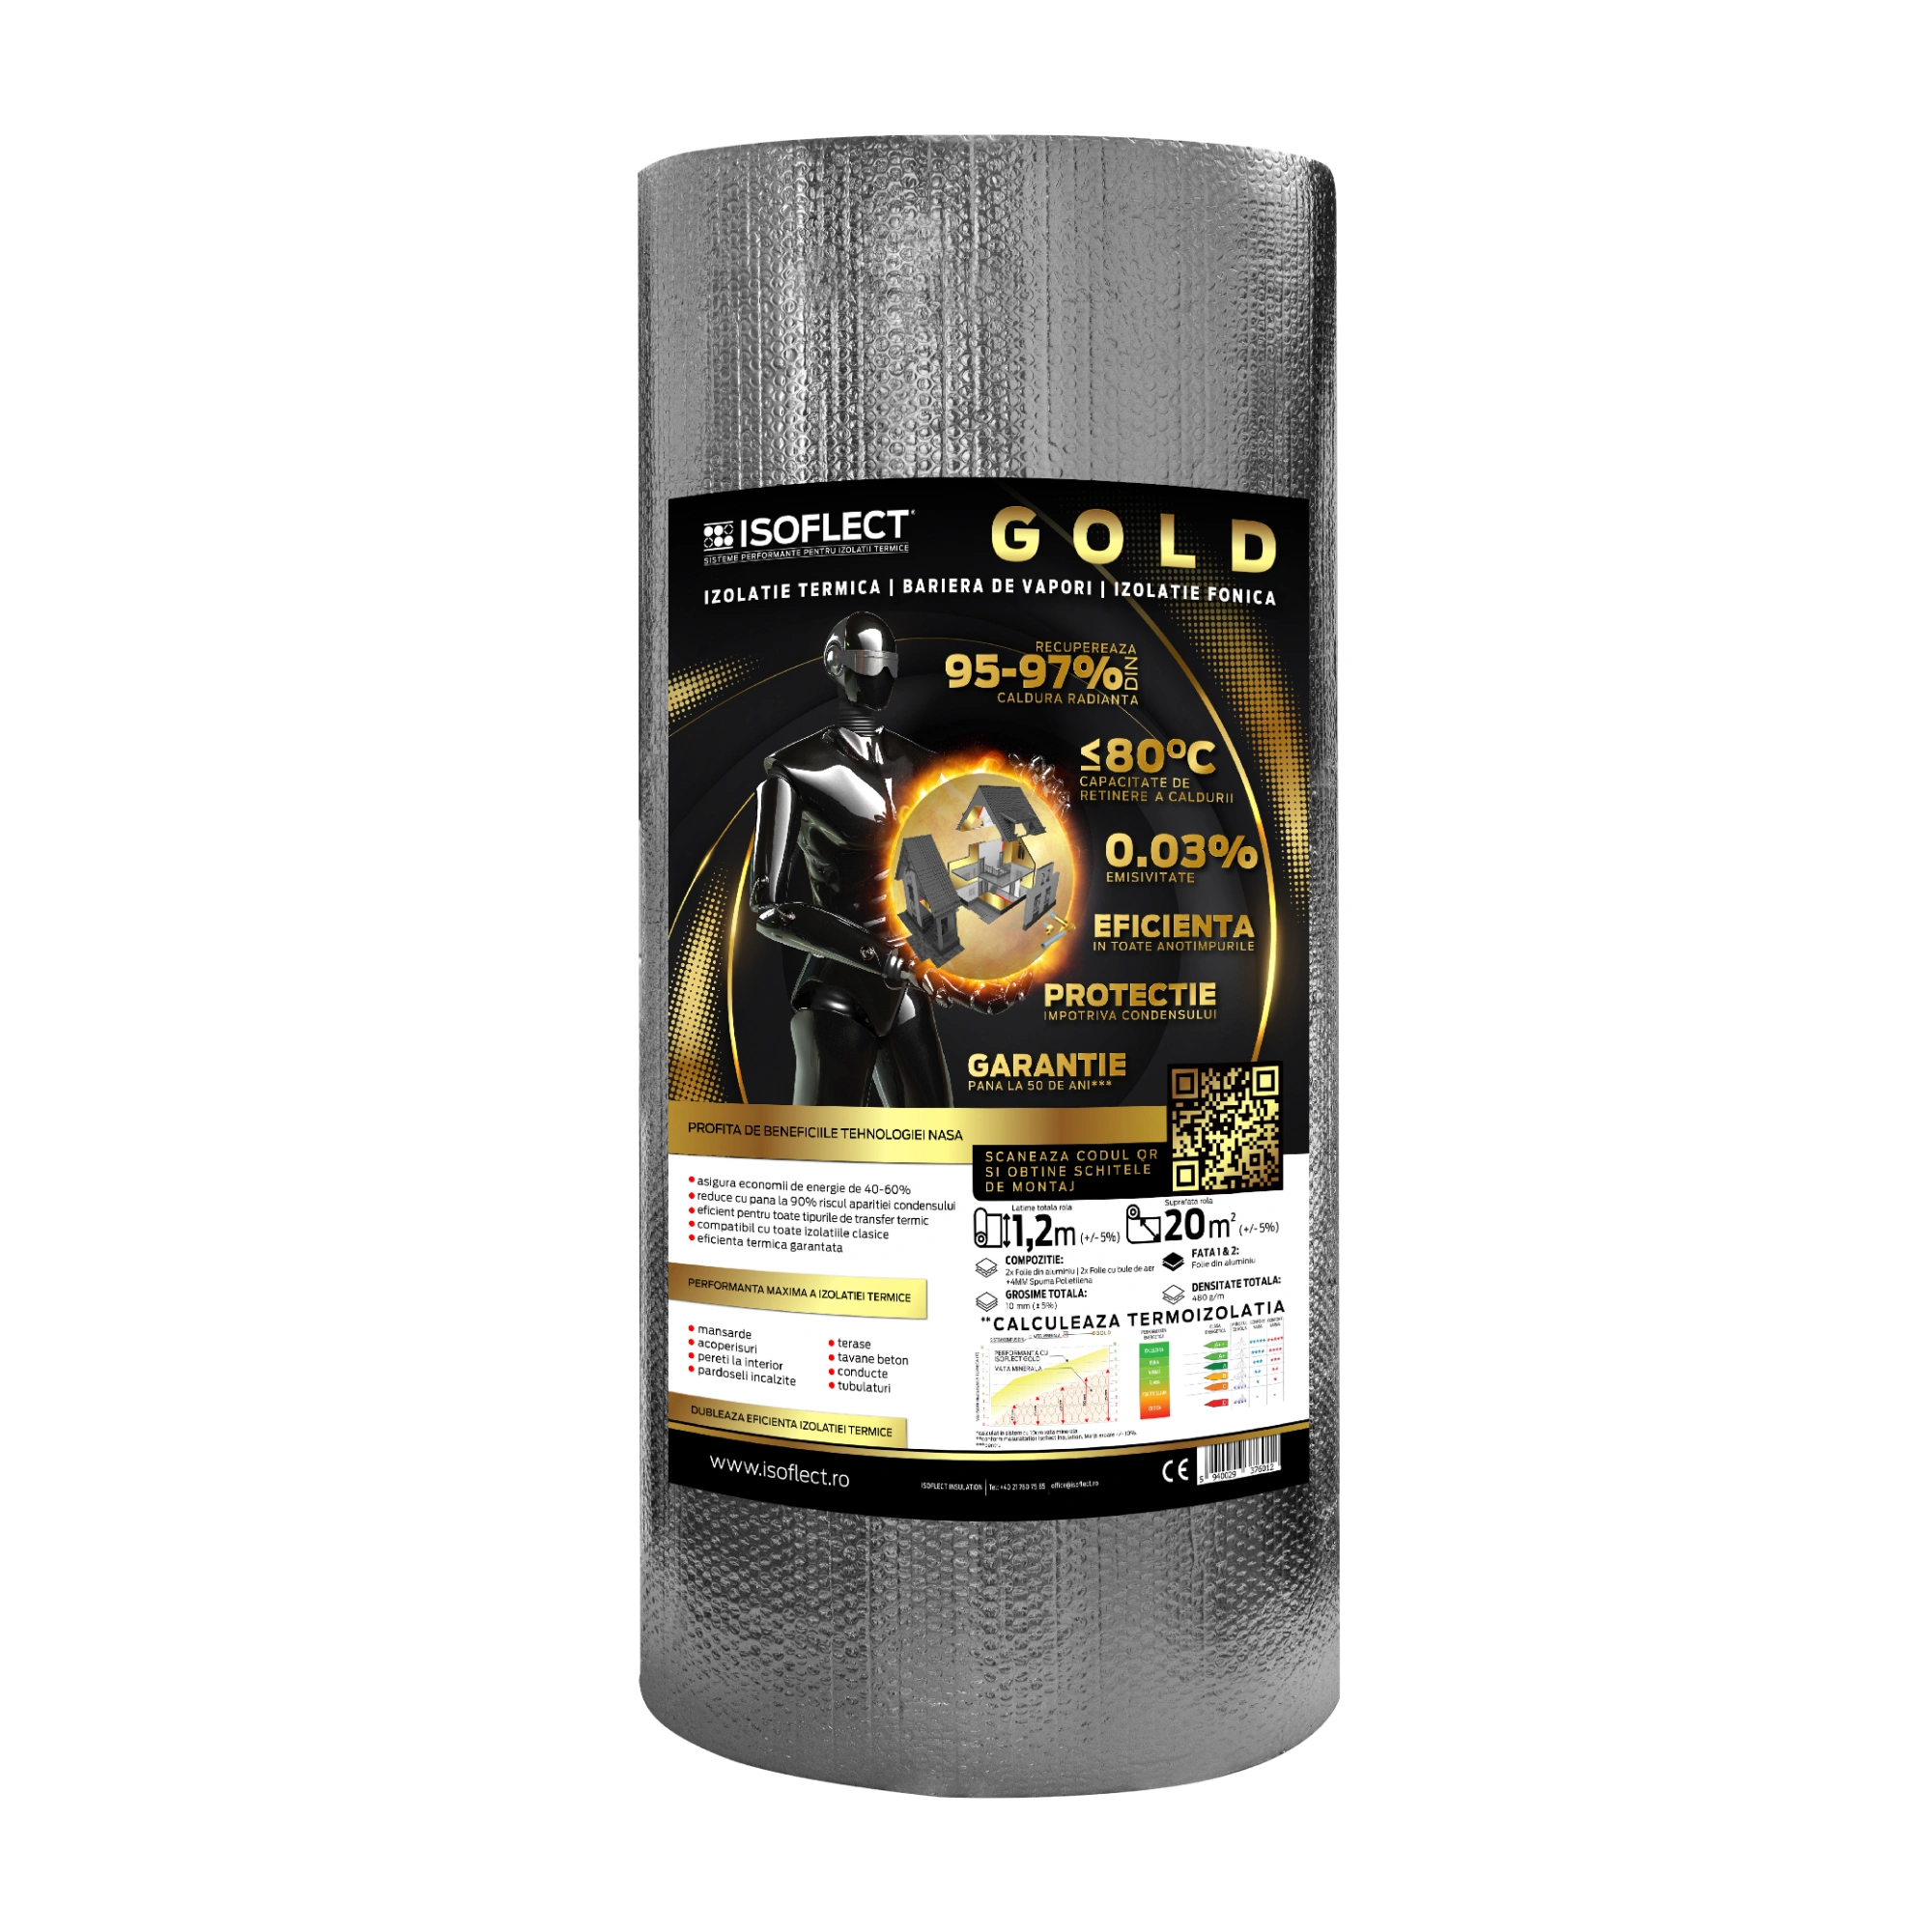 Folie bariera de vapori - Folie termoizolanta, Isoflect Gold, 5 straturi, 1.2 x 17m, bilden.ro